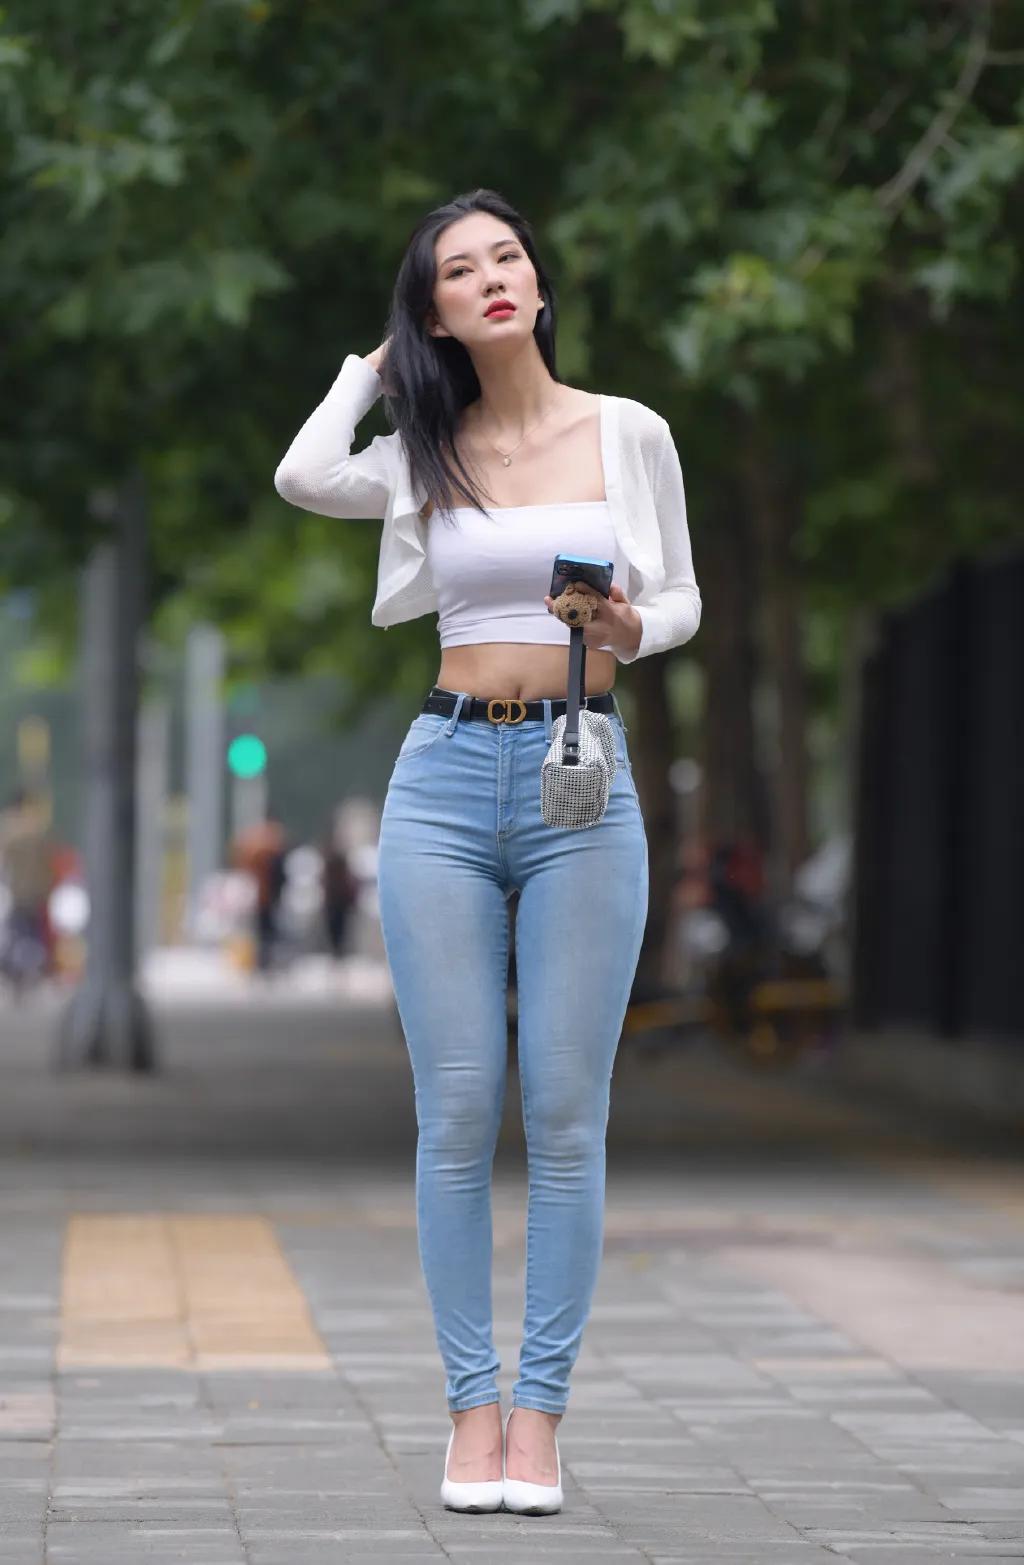 Women wear jeans to show their figure - iMedia